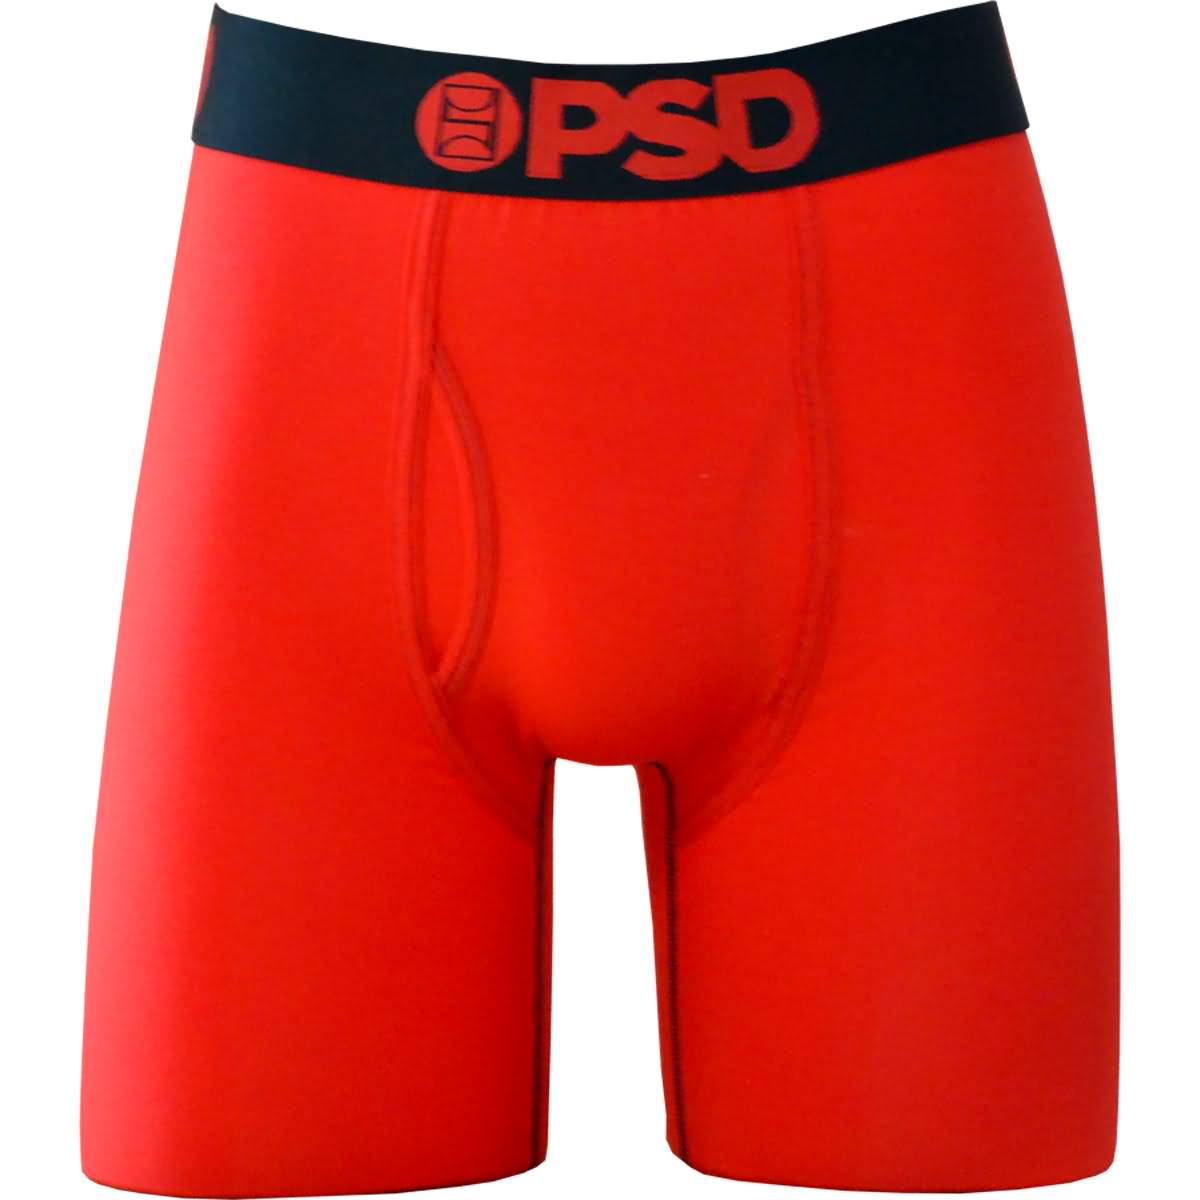 PSD Modal Red With Black Waistband Boxer Men's Bottom Underwear-91171026